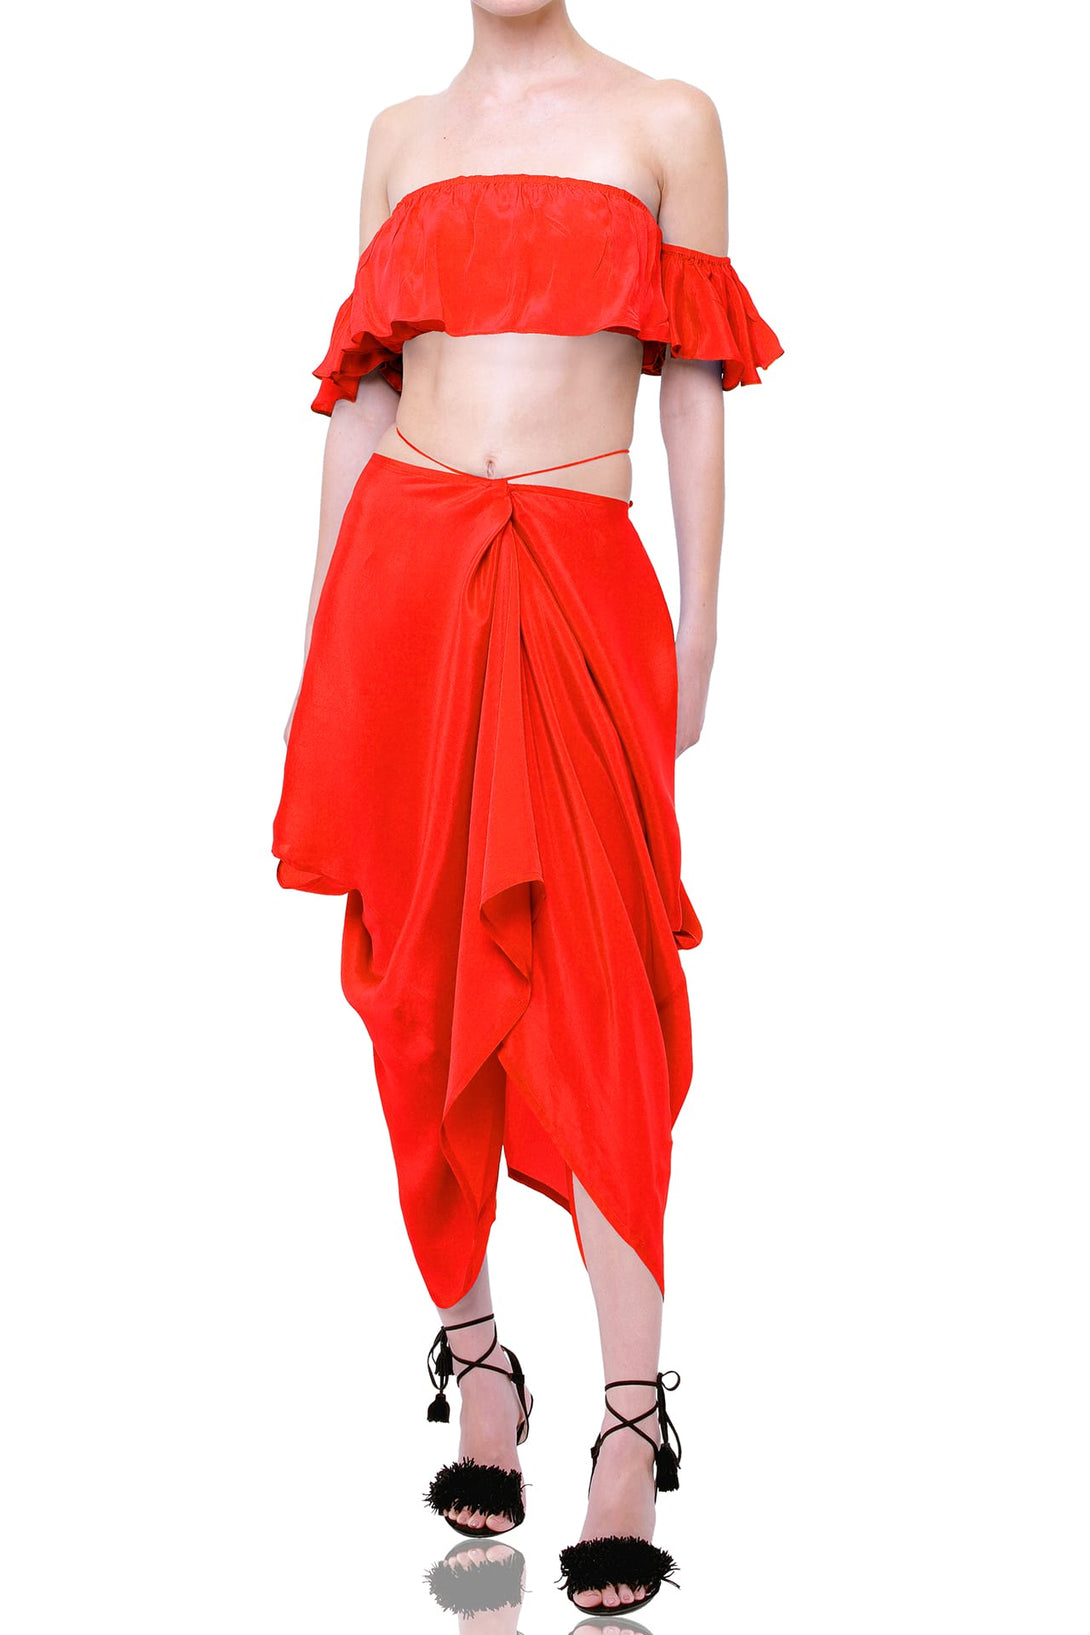  long sleeve mini dress red, plus size kaftan, short sleeveless party dress, Shahida Parides, cute short dresses,